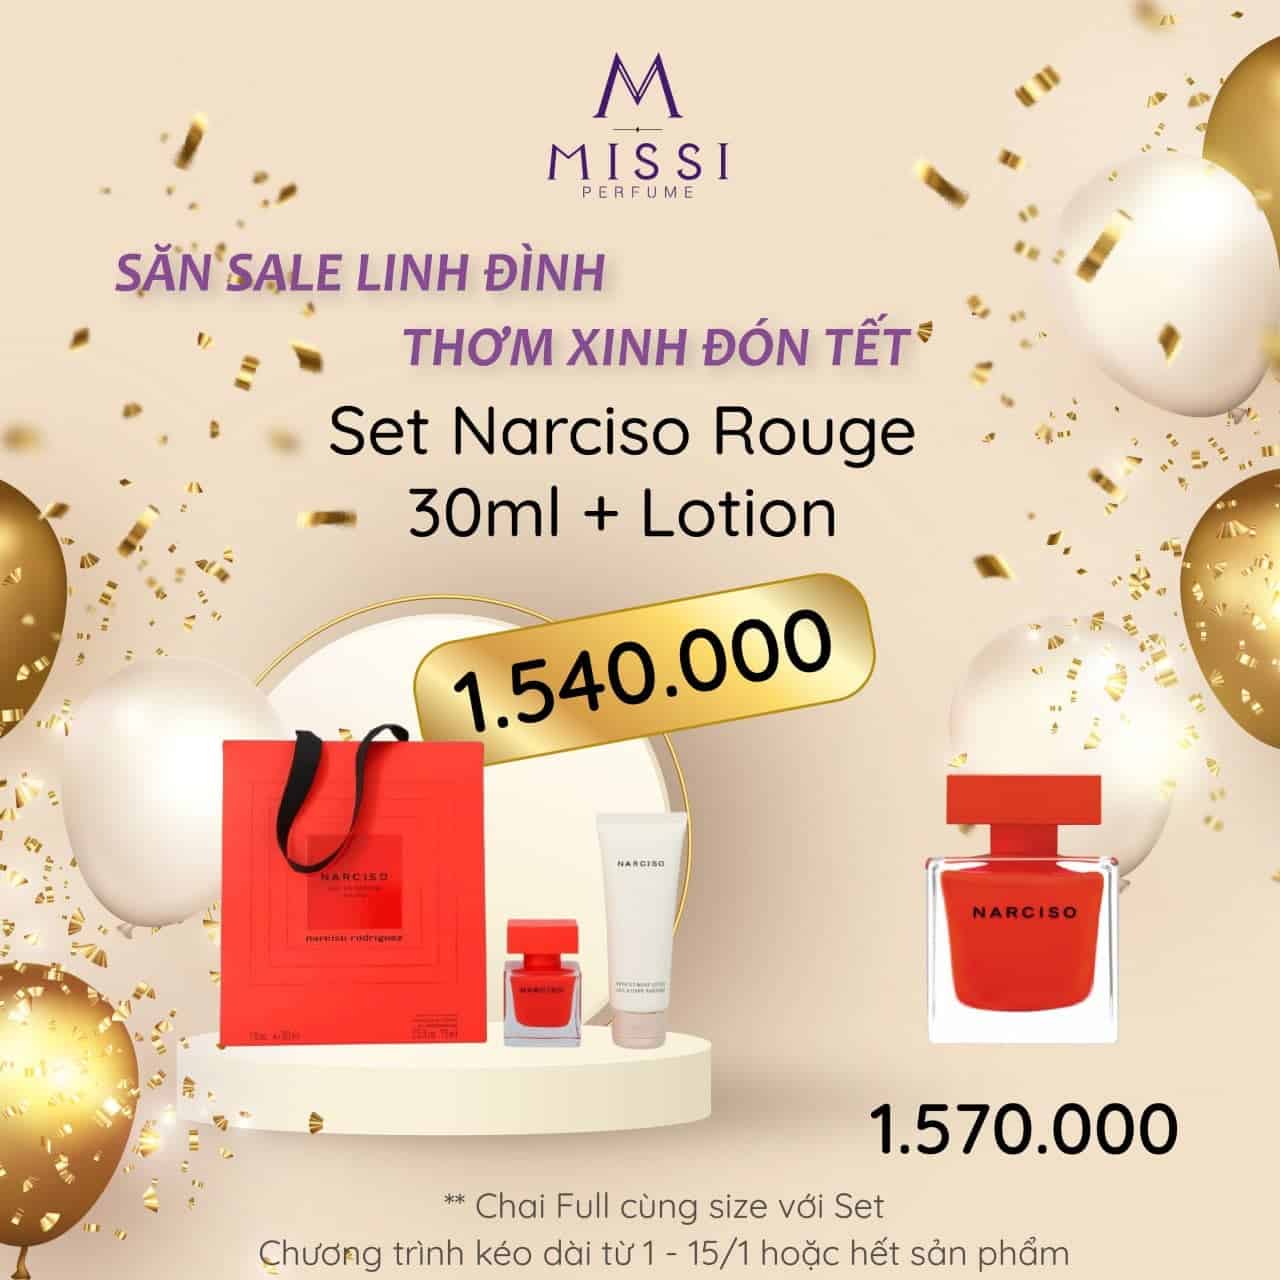 Set Narciso Rouge 30ml Missi Perfume